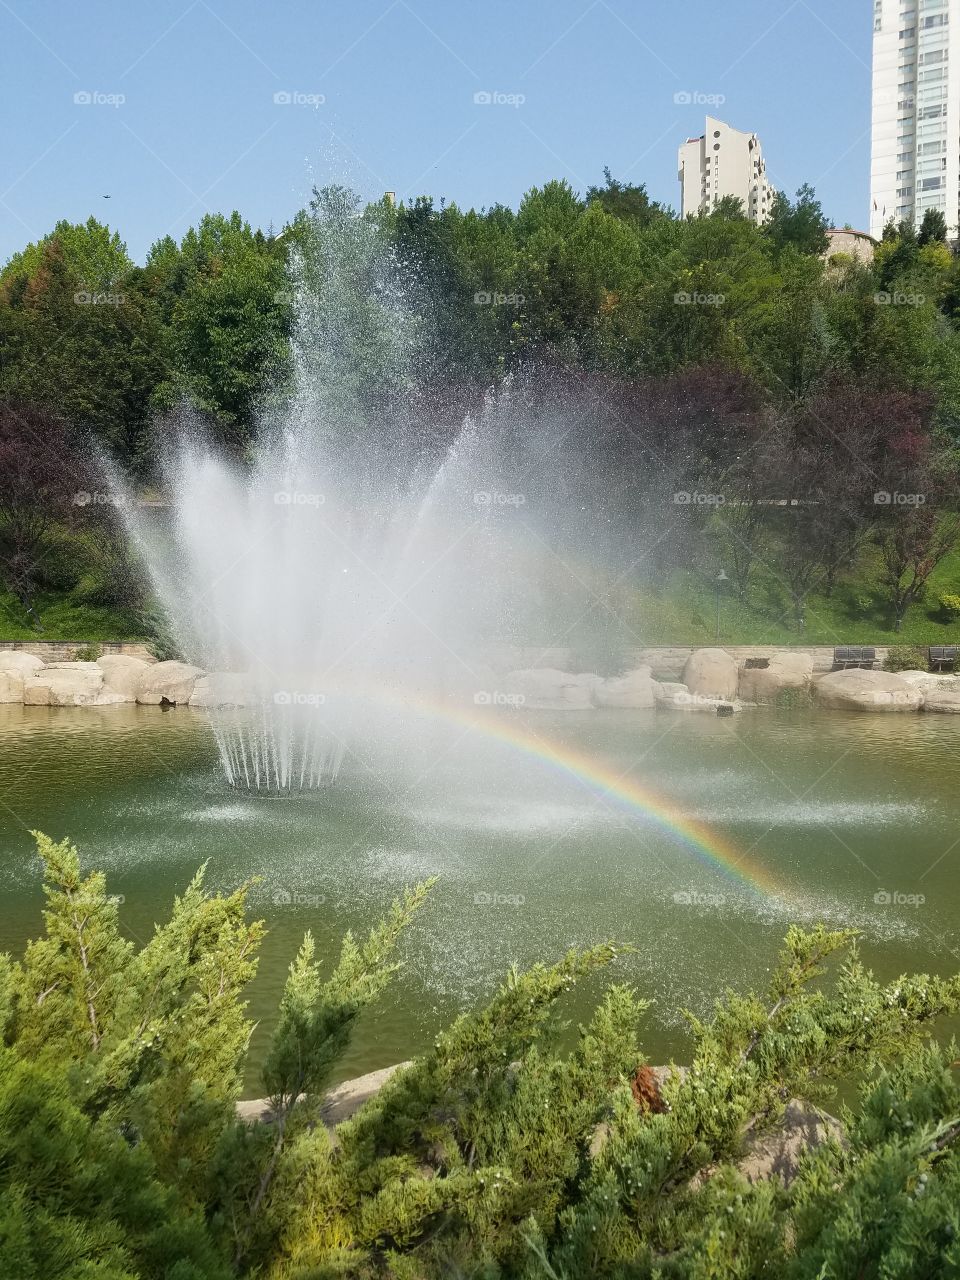 a waterfountain in the dikman vadesi park in Ankara Turkey,  rainbow